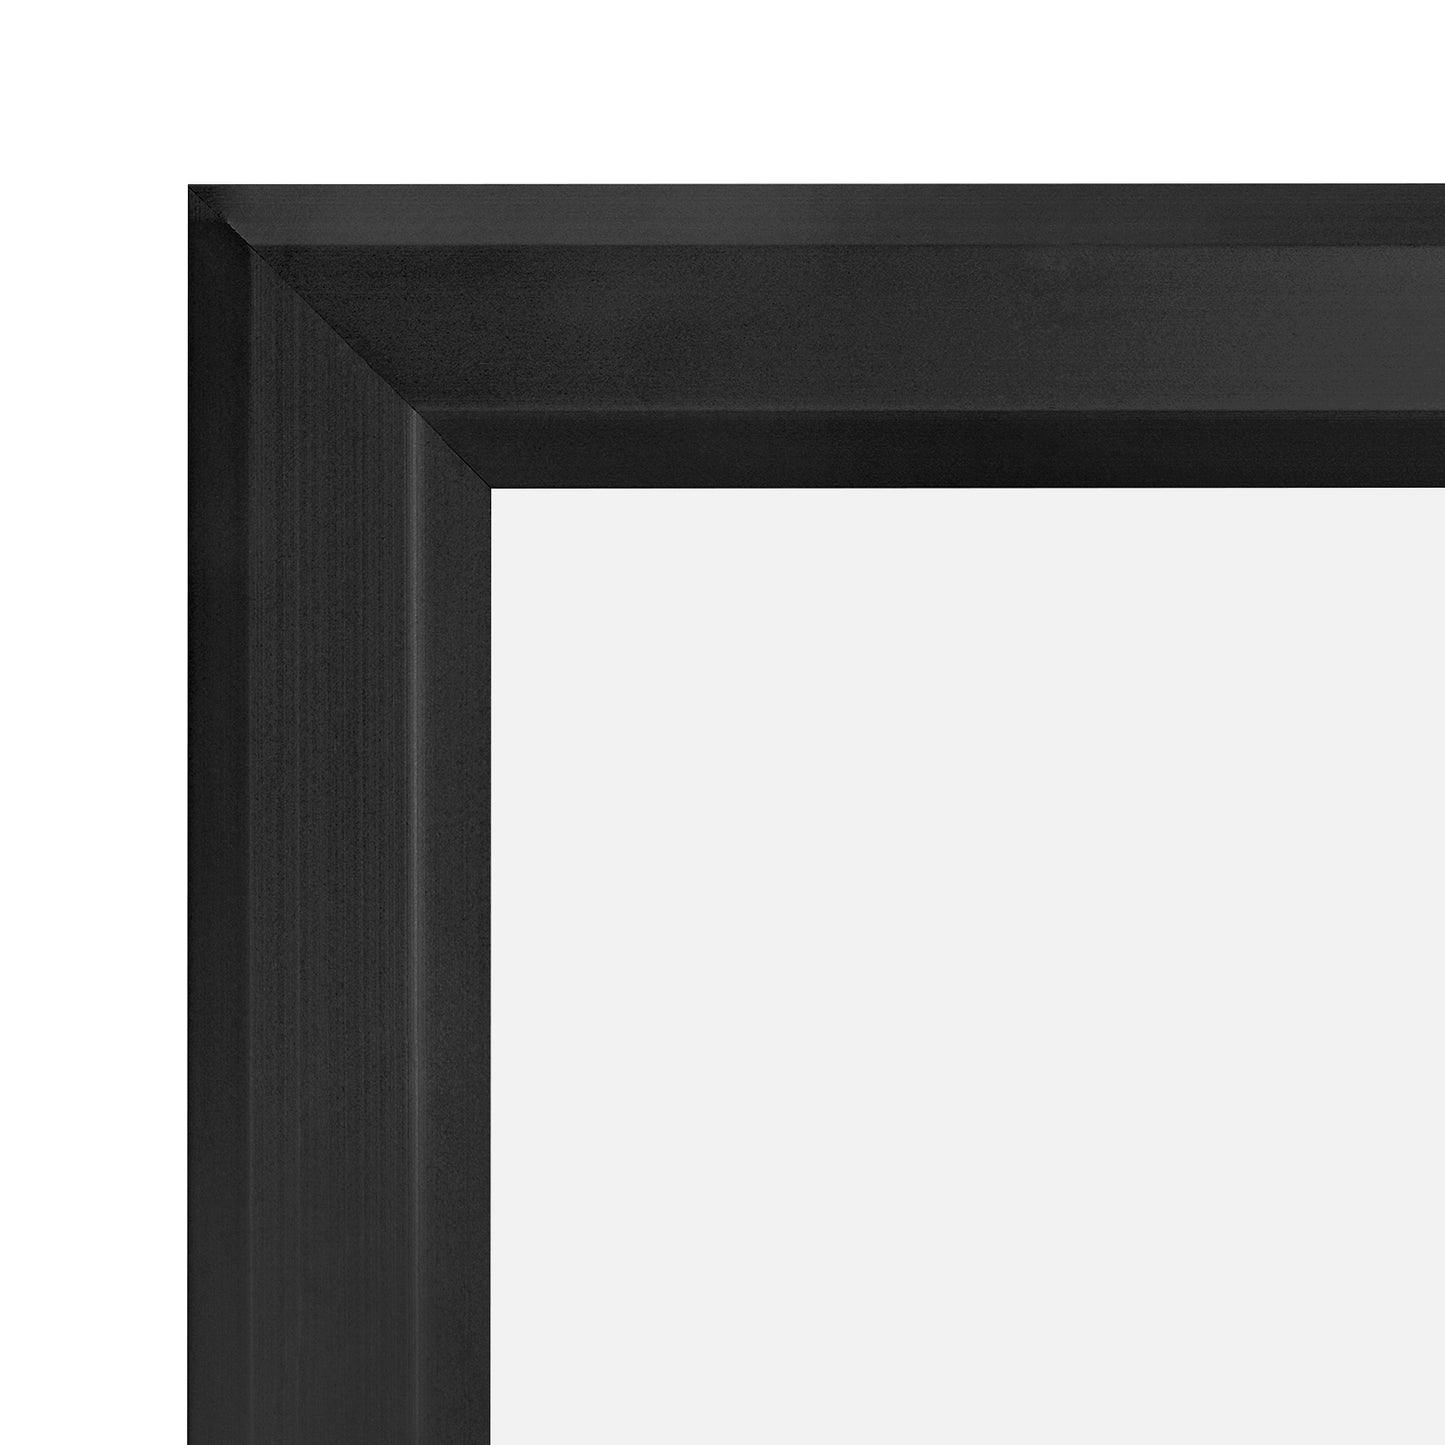 11x17 Black Snapezo® Snap Frame - 0.8" Profile